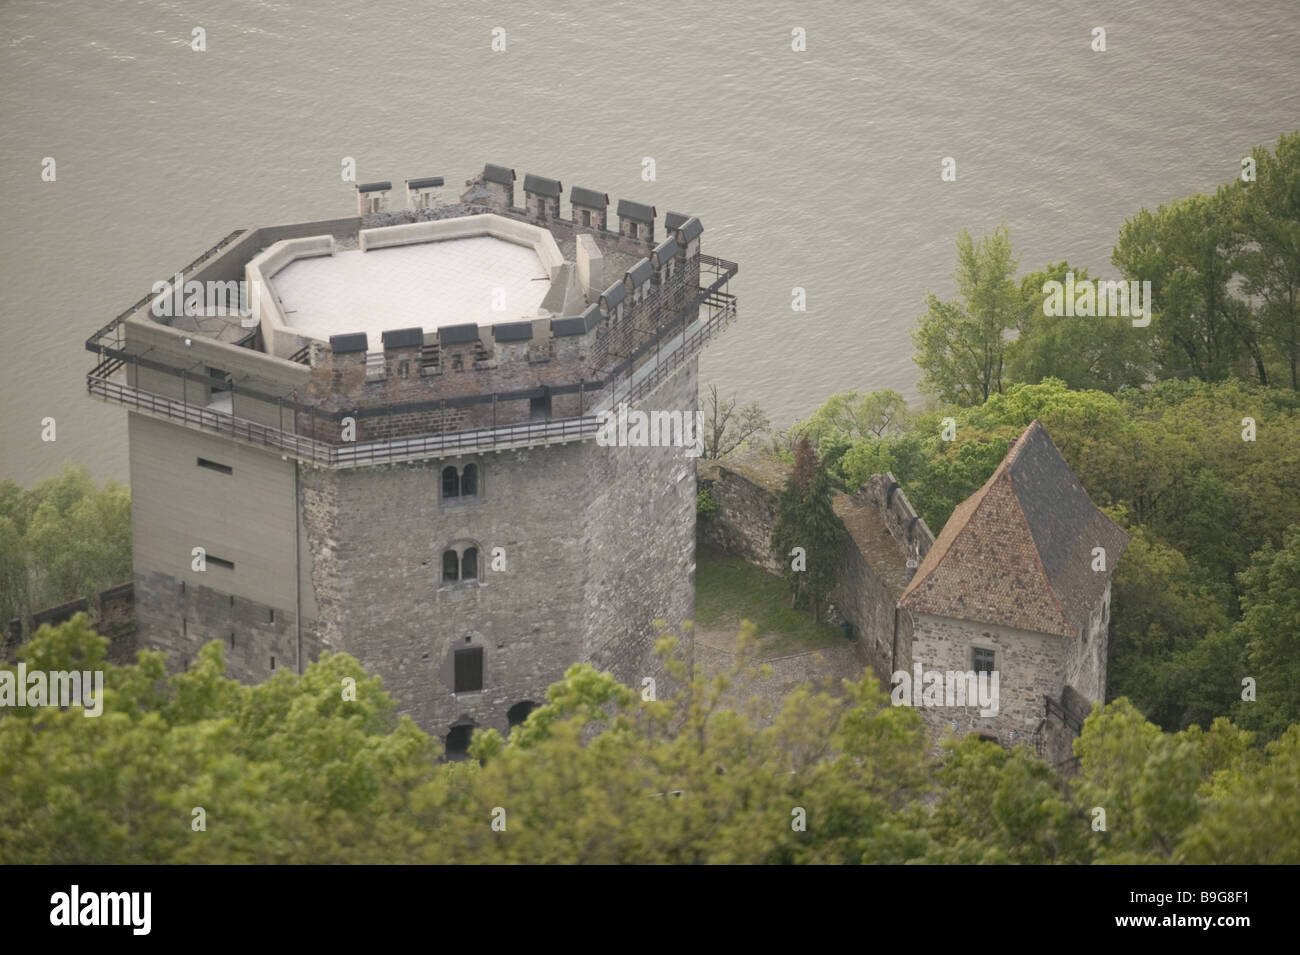 Ungarn-Visegrad Burg Salomon-Turm Donau Übersicht Donauknie Plintenburg  Visegrád Bau historisch Festungsturm Stockfotografie - Alamy